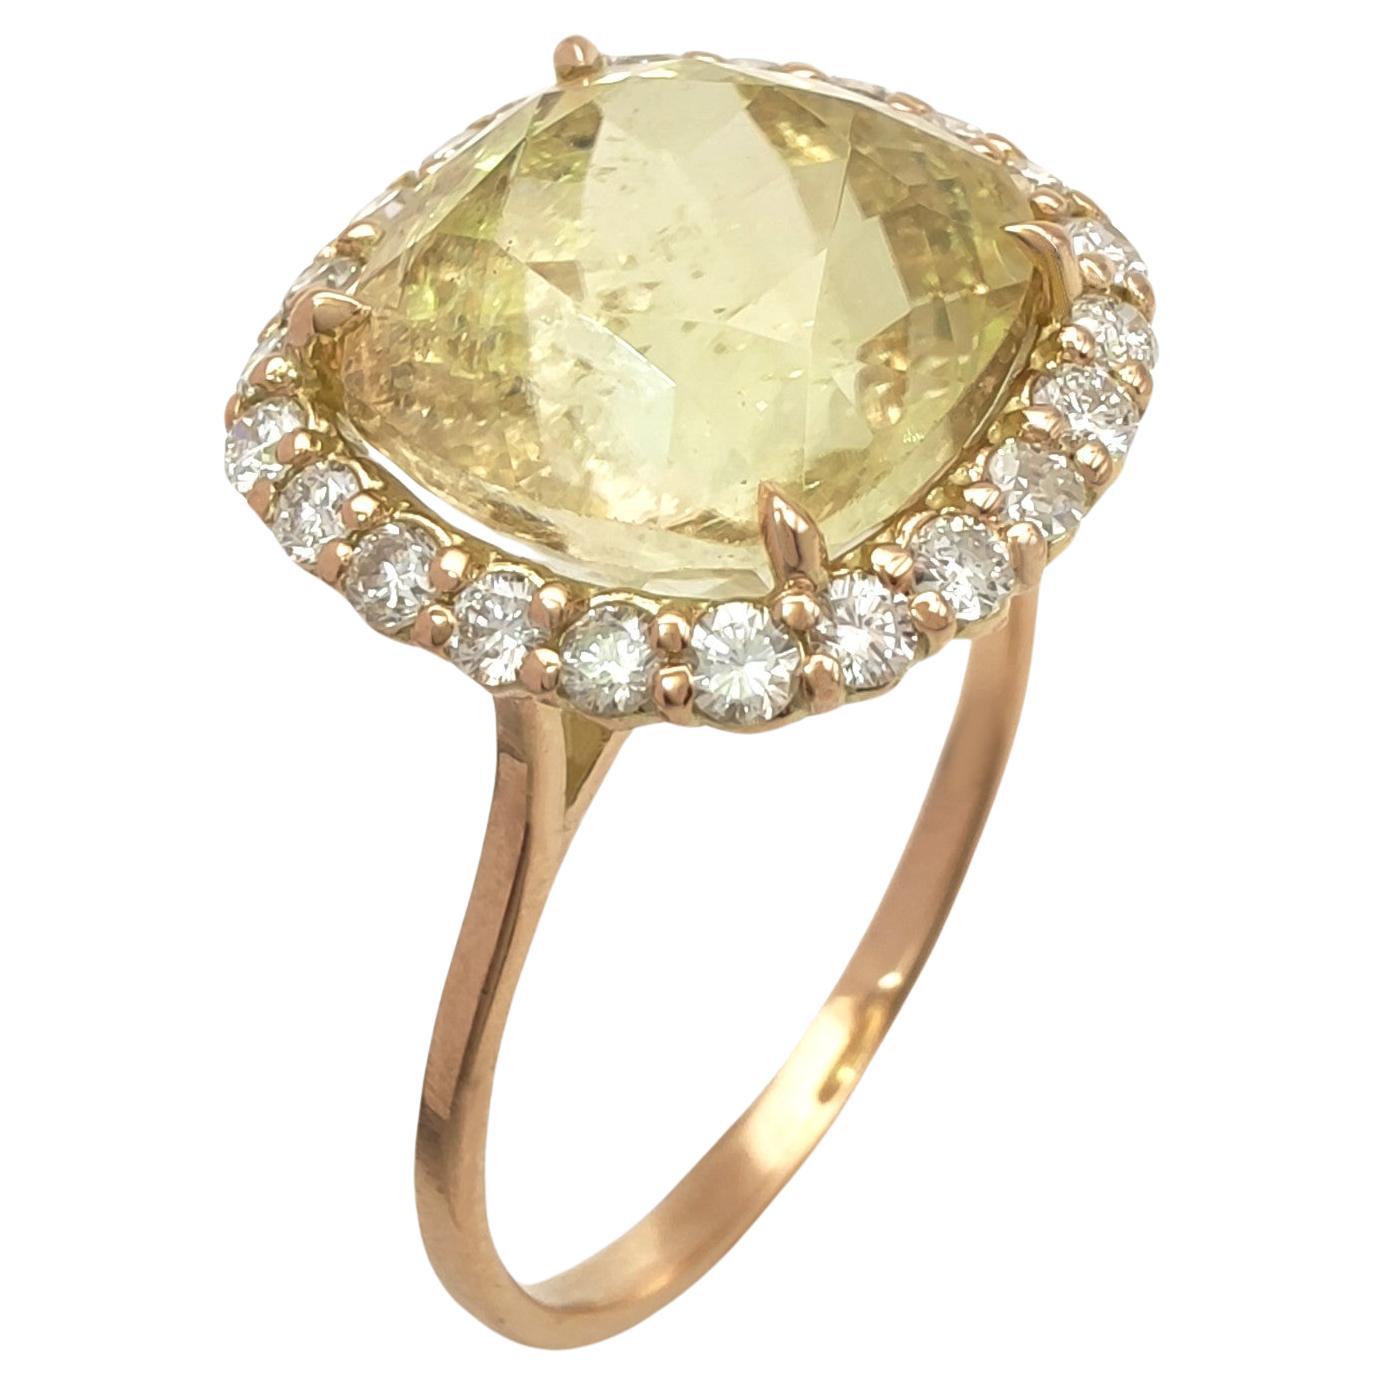 Luxurious Handmade 14k Gold Ring with Certified Yellow Tourmaline and Diamonds